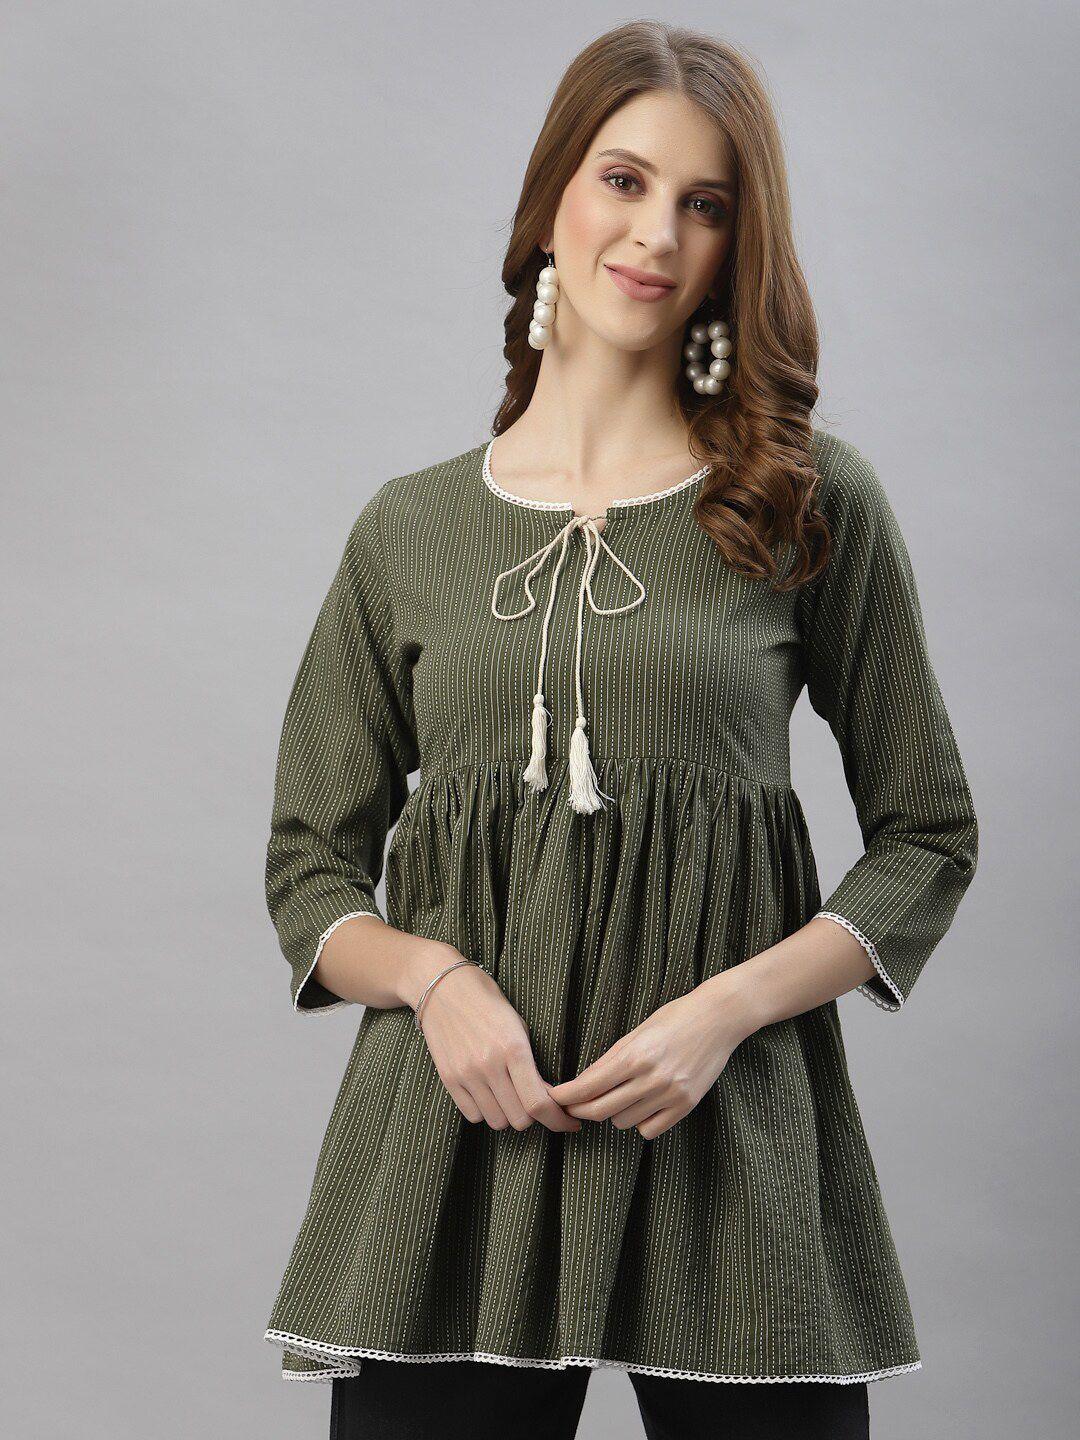 serona fabrics green & white tunic